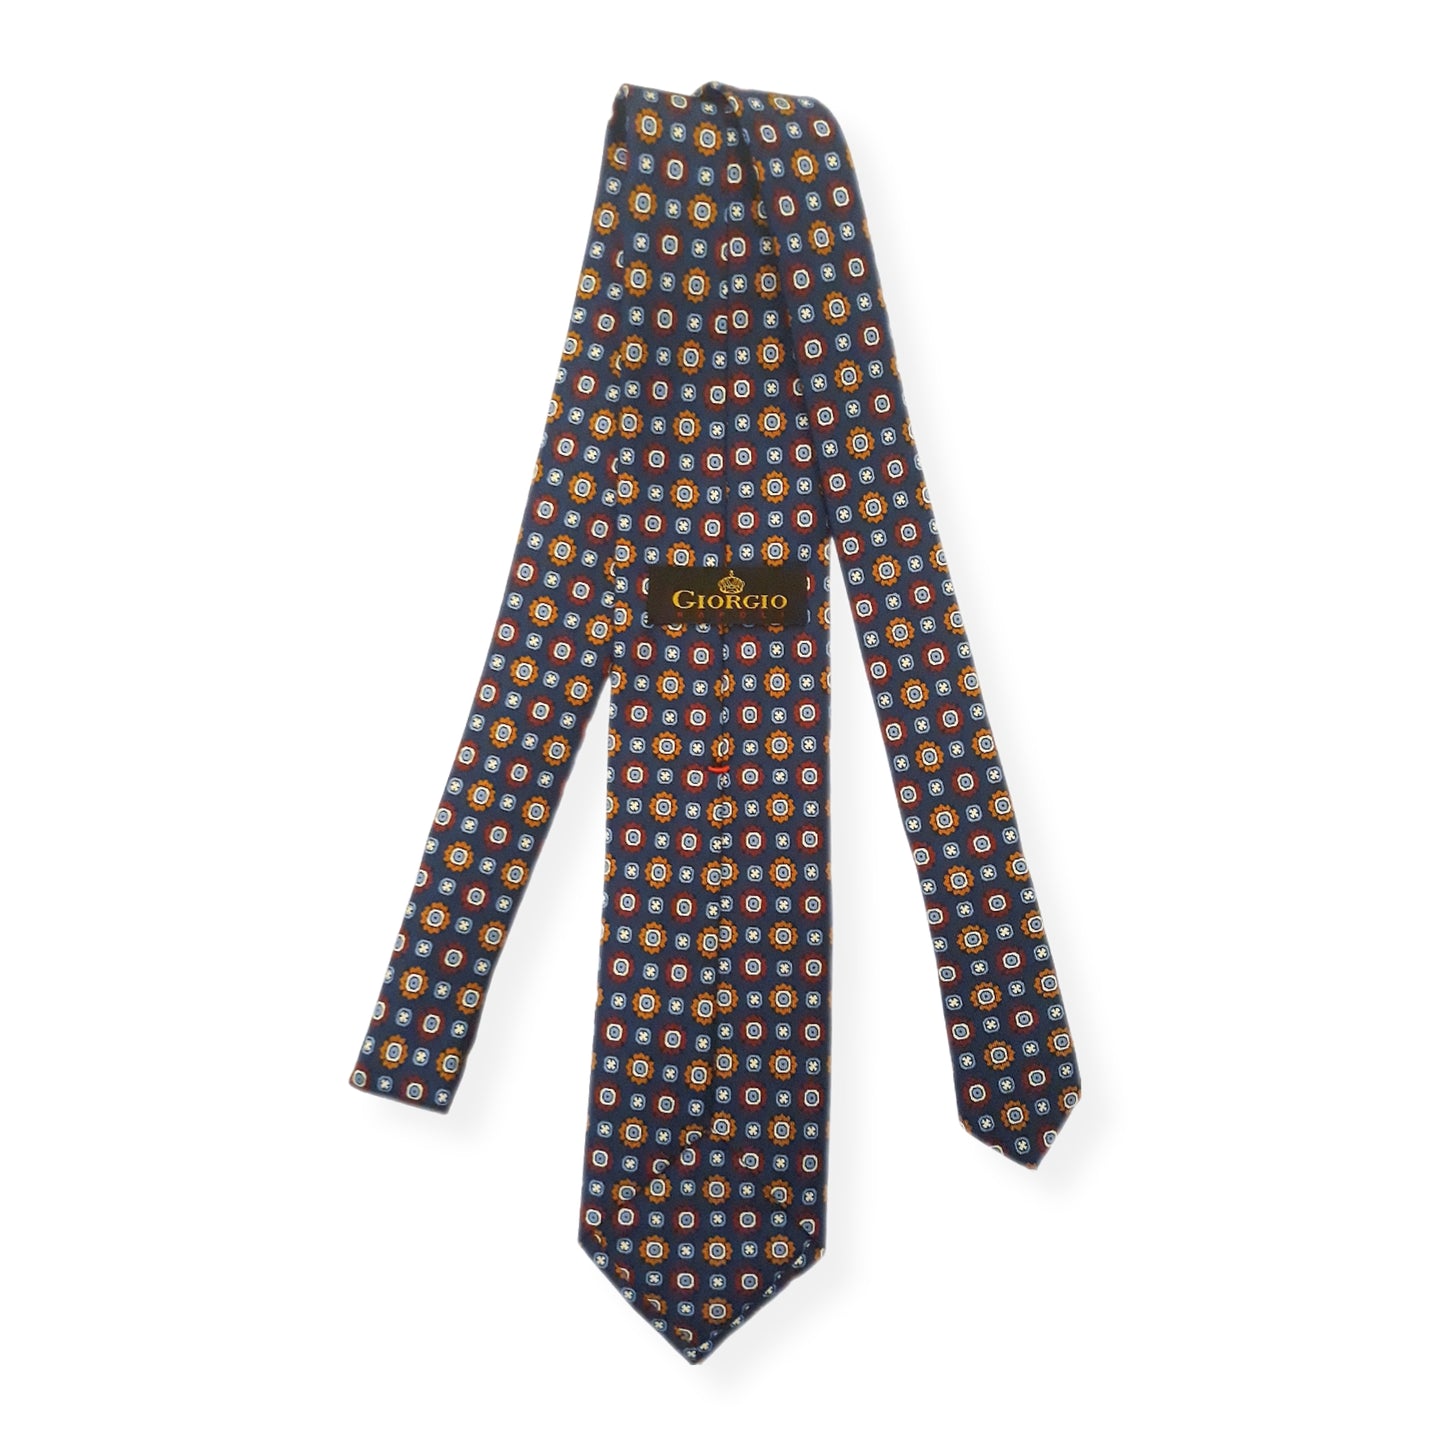 Cravatta blue navy a fantasia 3 pieghe di pura seta fatta a mano